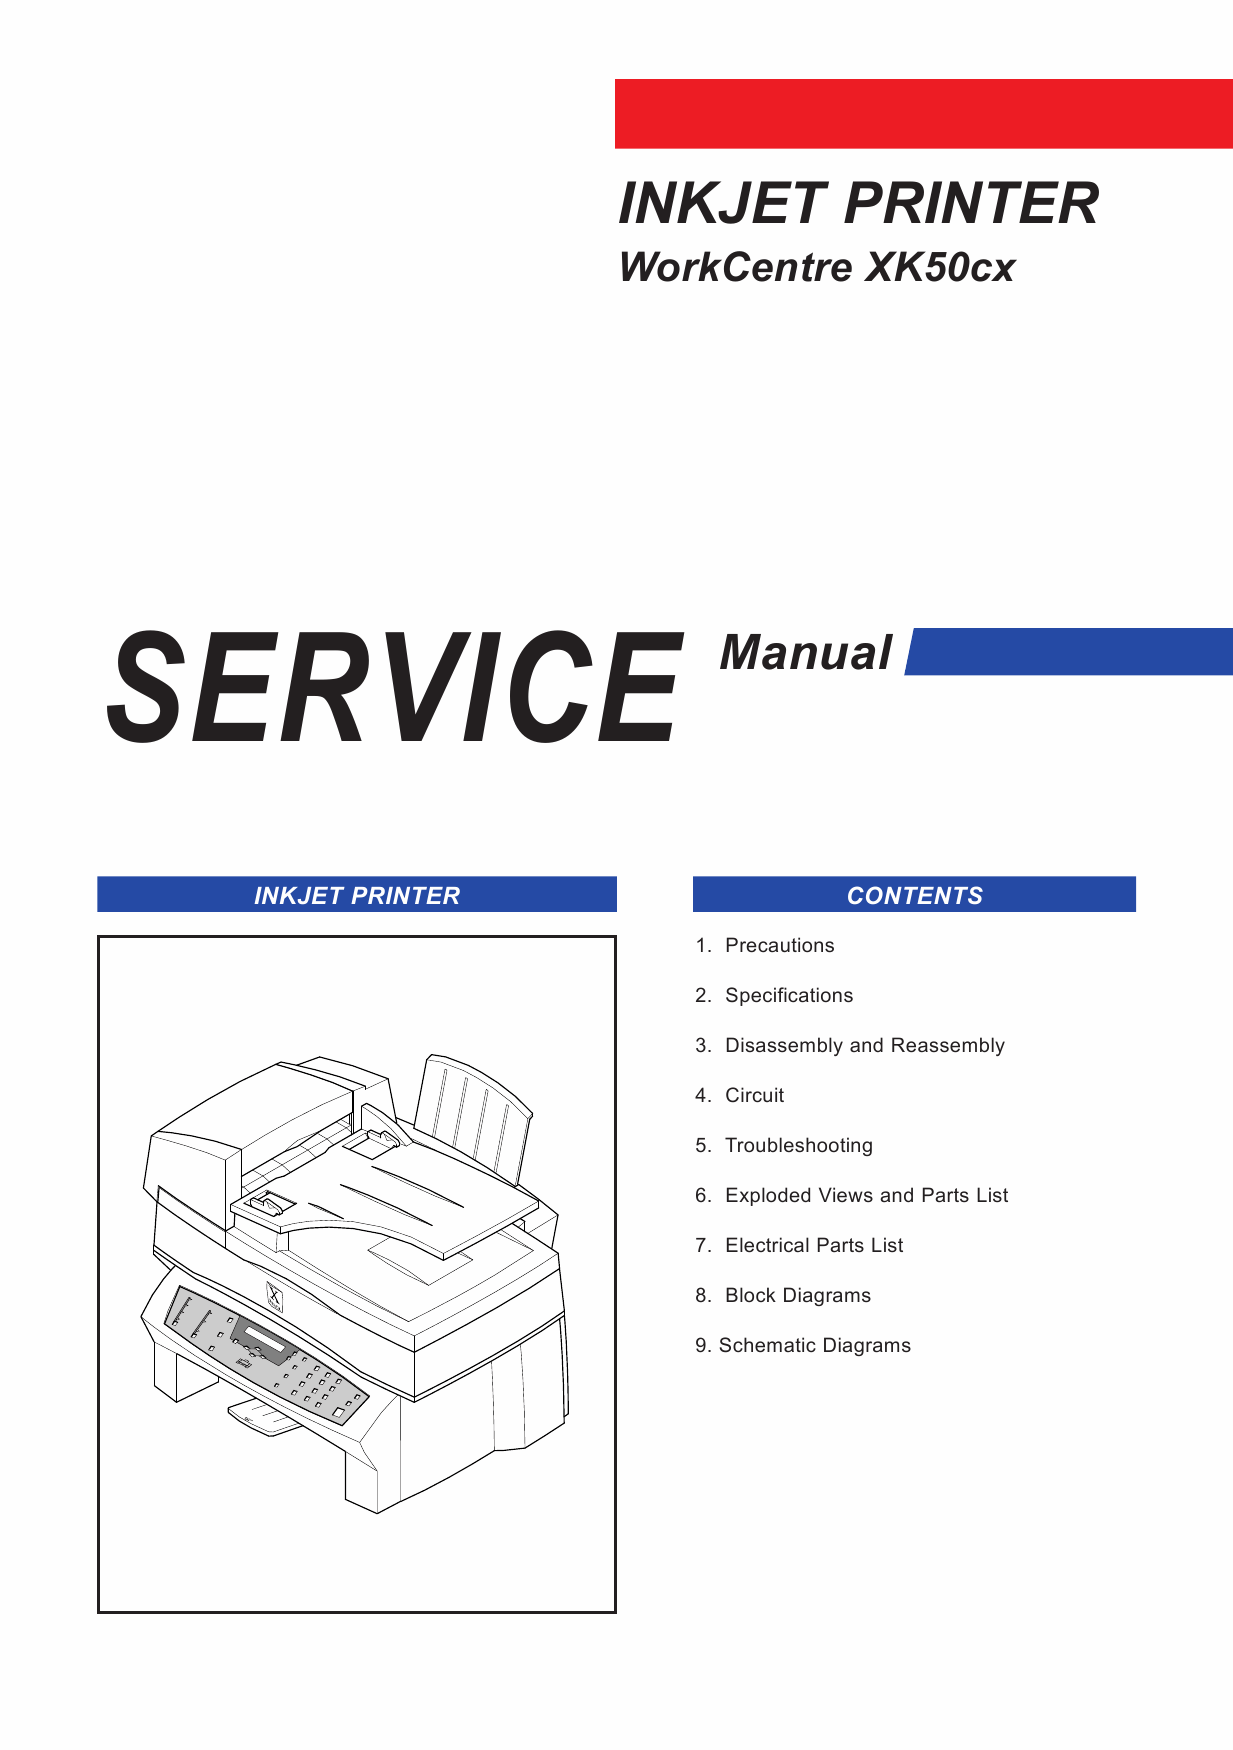 Samsung InkJet-Printer WorkCentre-XK50cx Parts and Service Manual-1